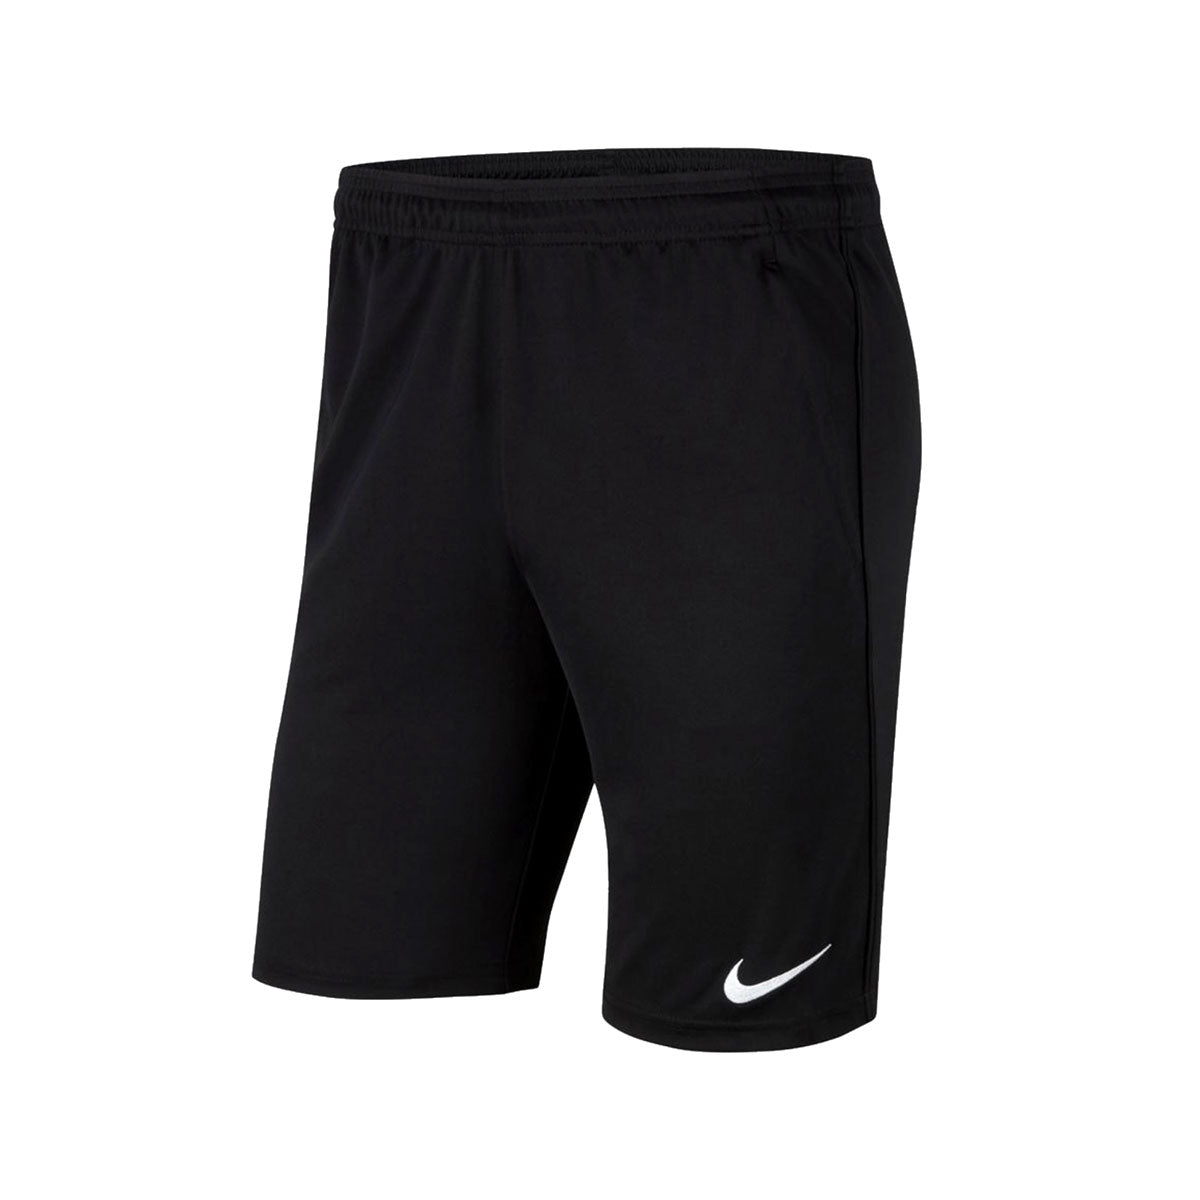 Nike Men's Challenger 7'' Brief-Lined Running Shorts